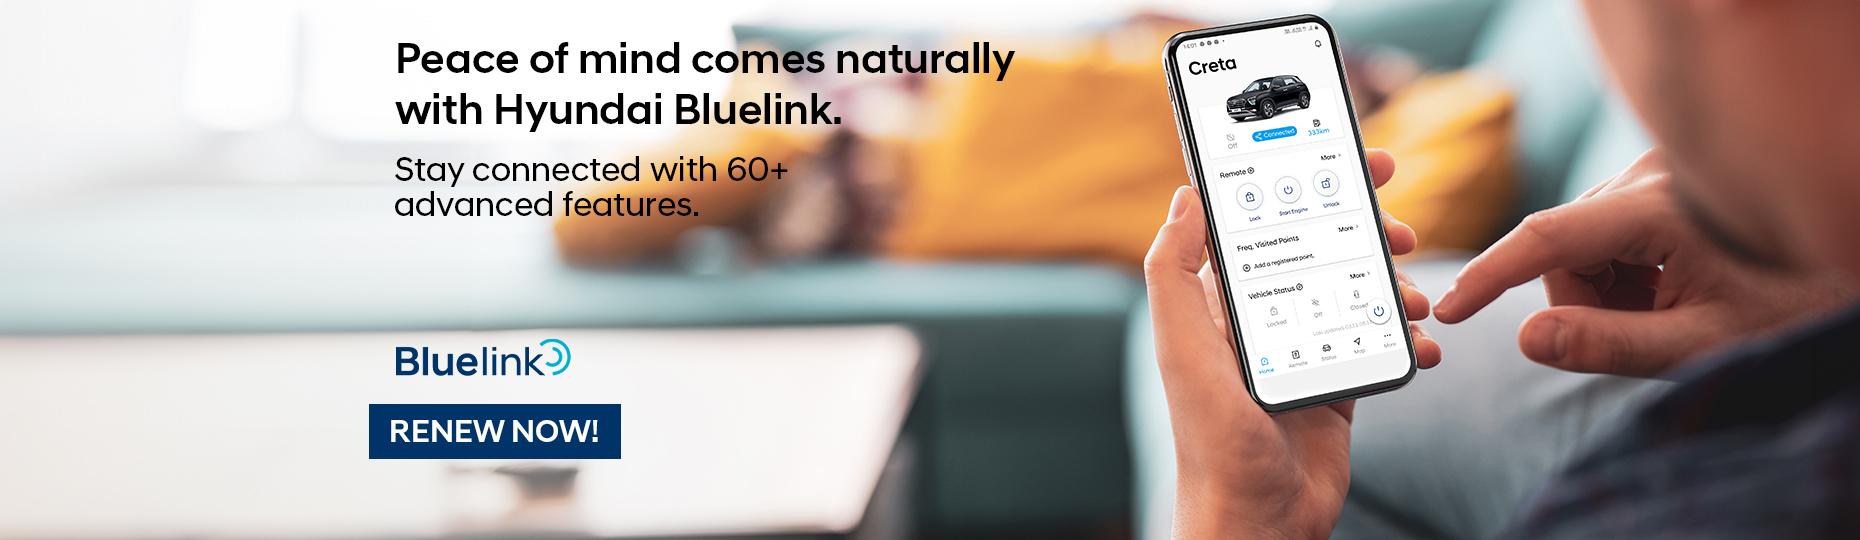 bluelink subscription